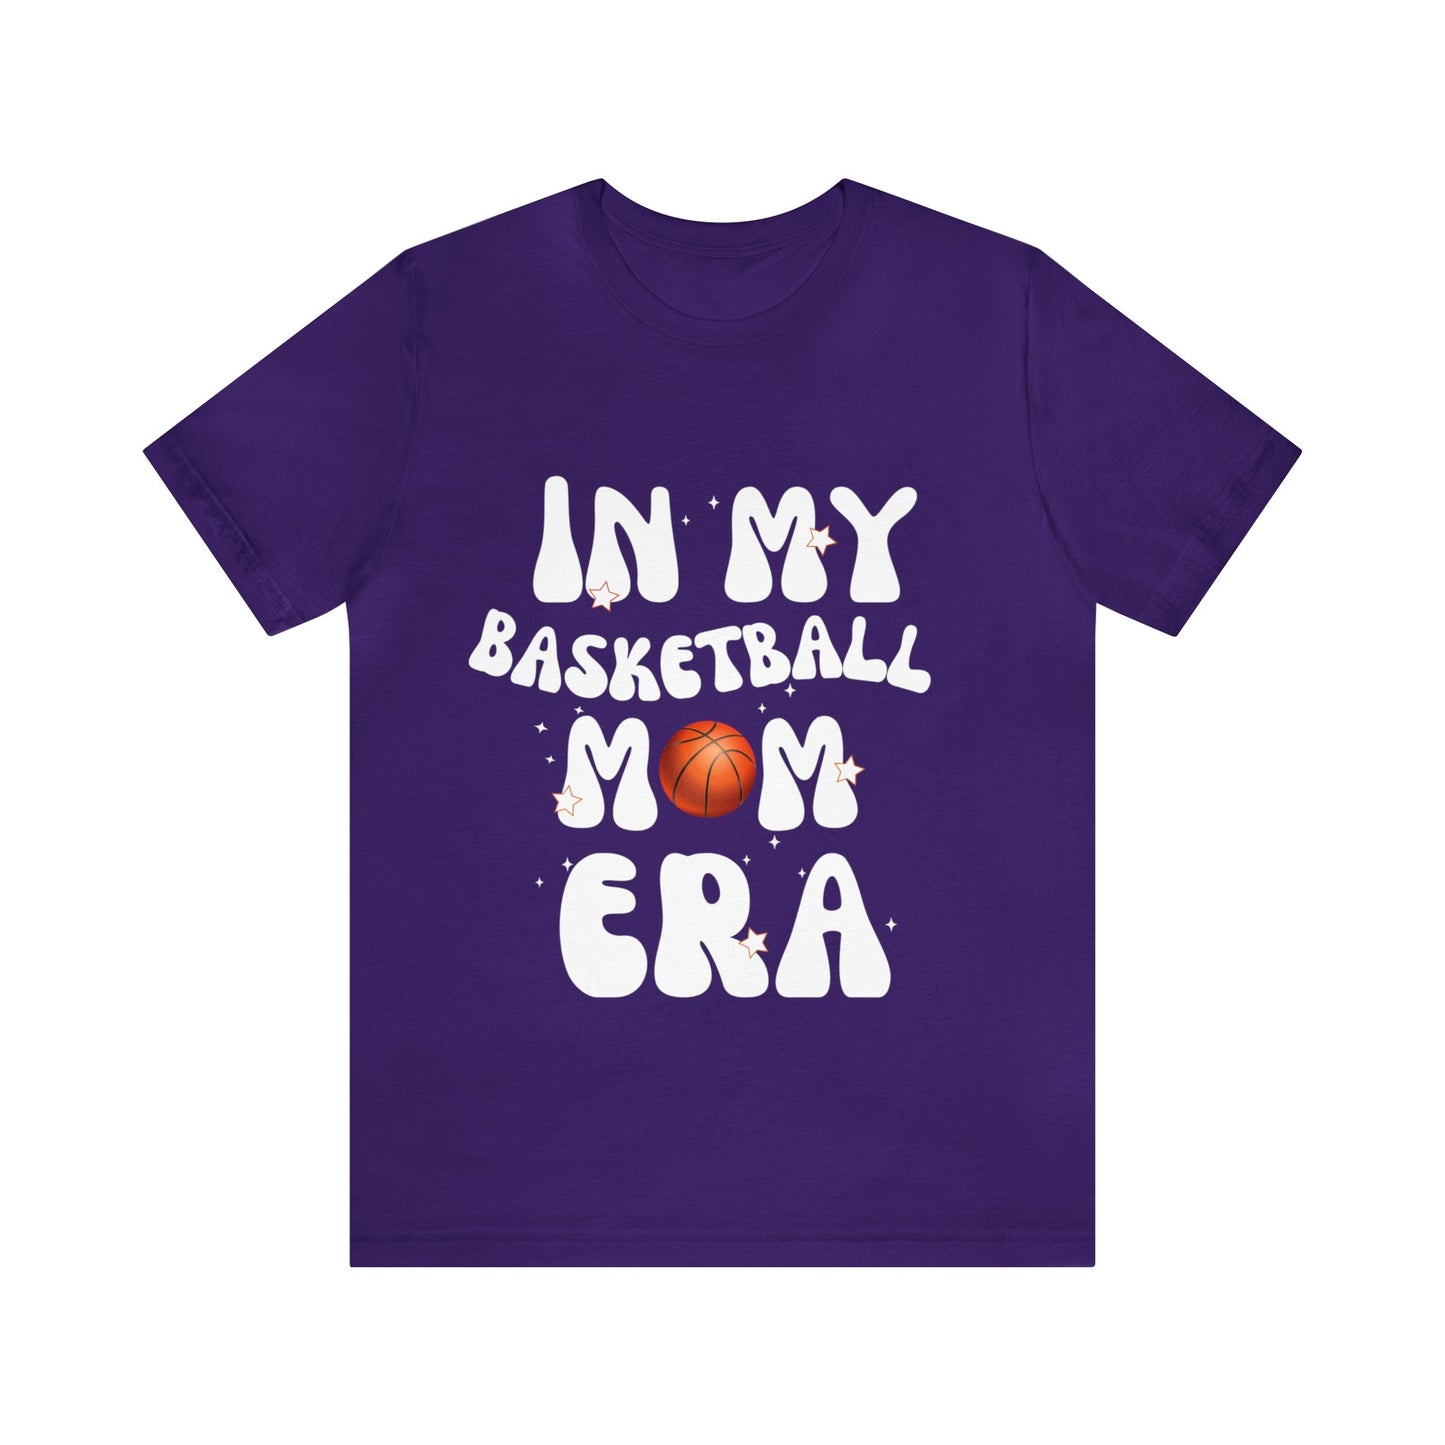 In My Basketball Mom Era - Unisex Jersey Short Sleeve Tee